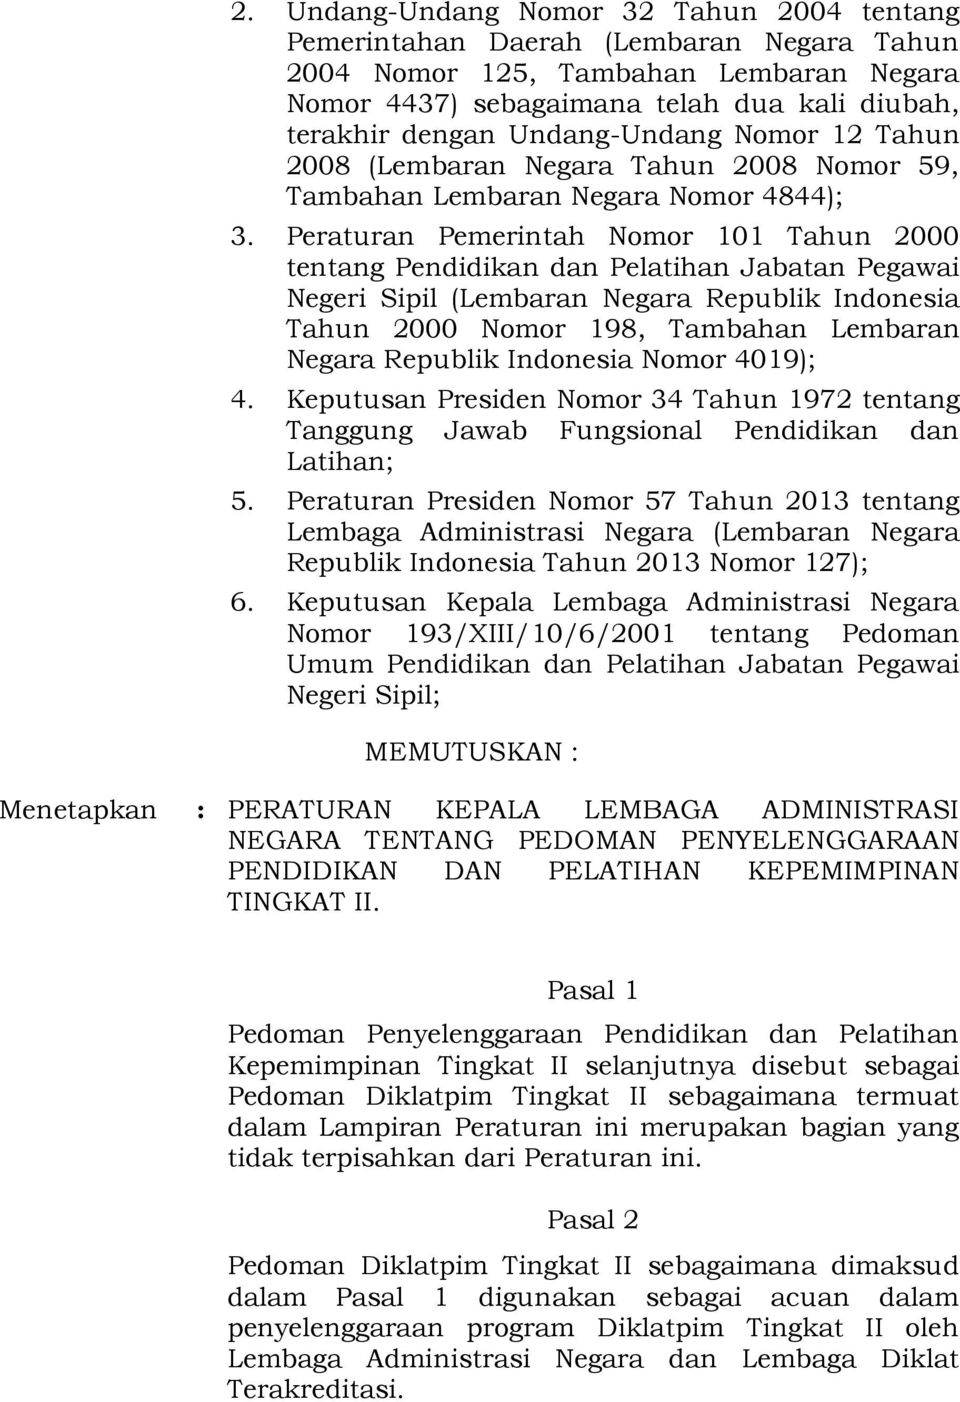 Peraturan Pemerintah Nomor 101 Tahun 2000 tentang Pendidikan dan Pelatihan Jabatan Pegawai Negeri Sipil (Lembaran Negara Republik Indonesia Tahun 2000 Nomor 198, Tambahan Lembaran Negara Republik